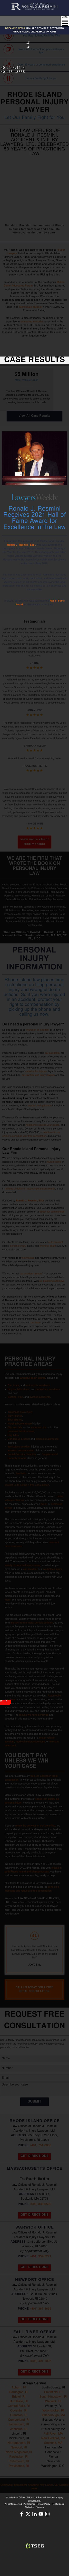 Law Offices of Ronald J. Resmini, LTD. - Providence RI Lawyers